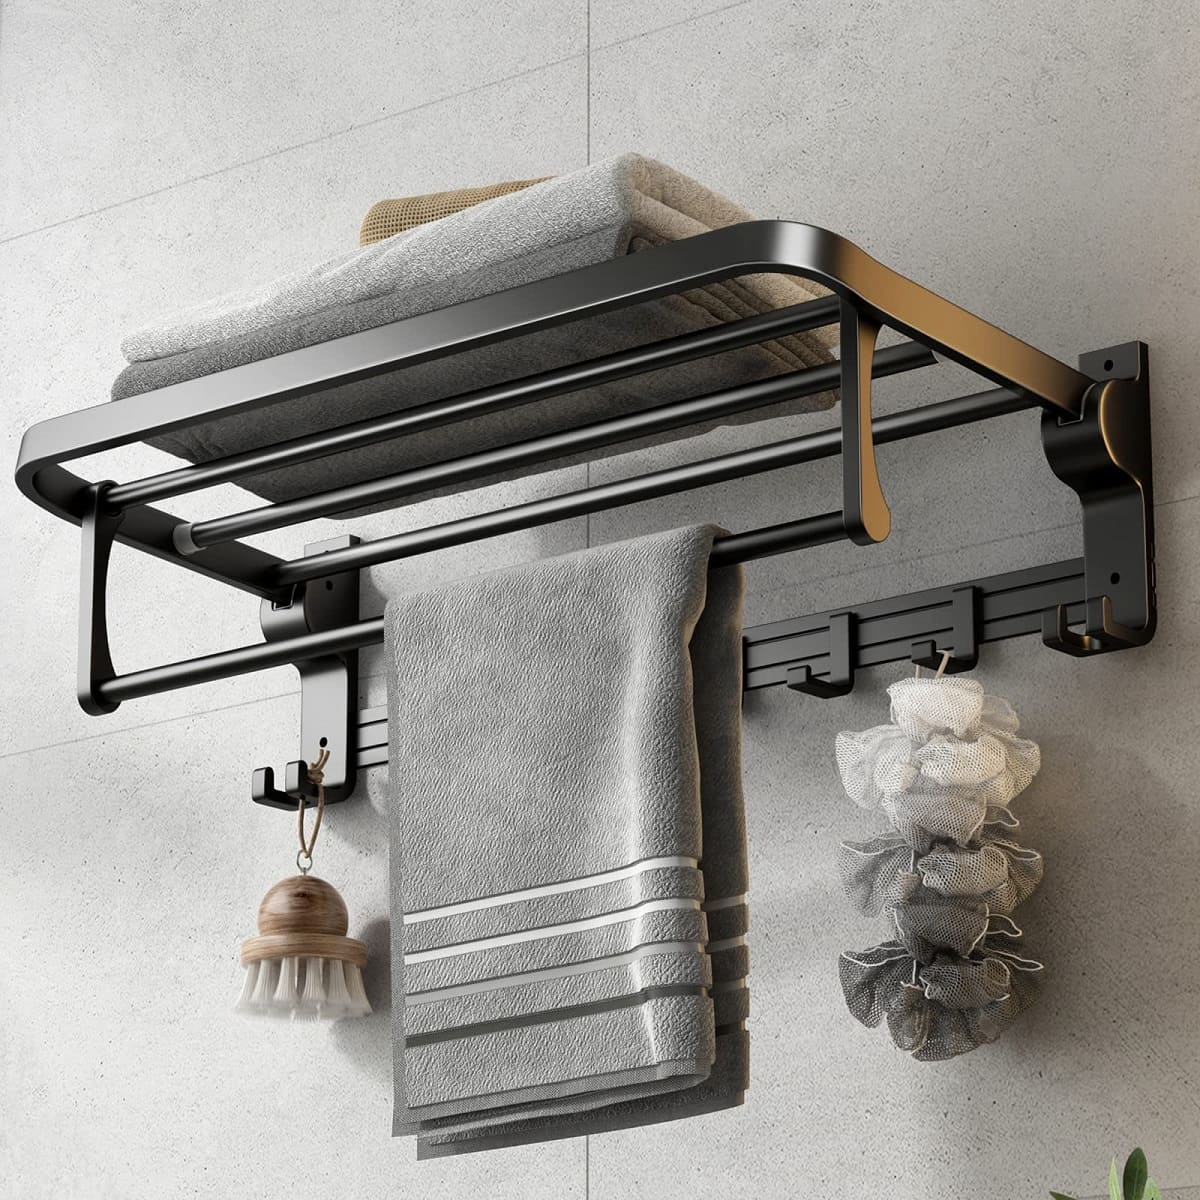 How To Fold Towel On Towel Bar